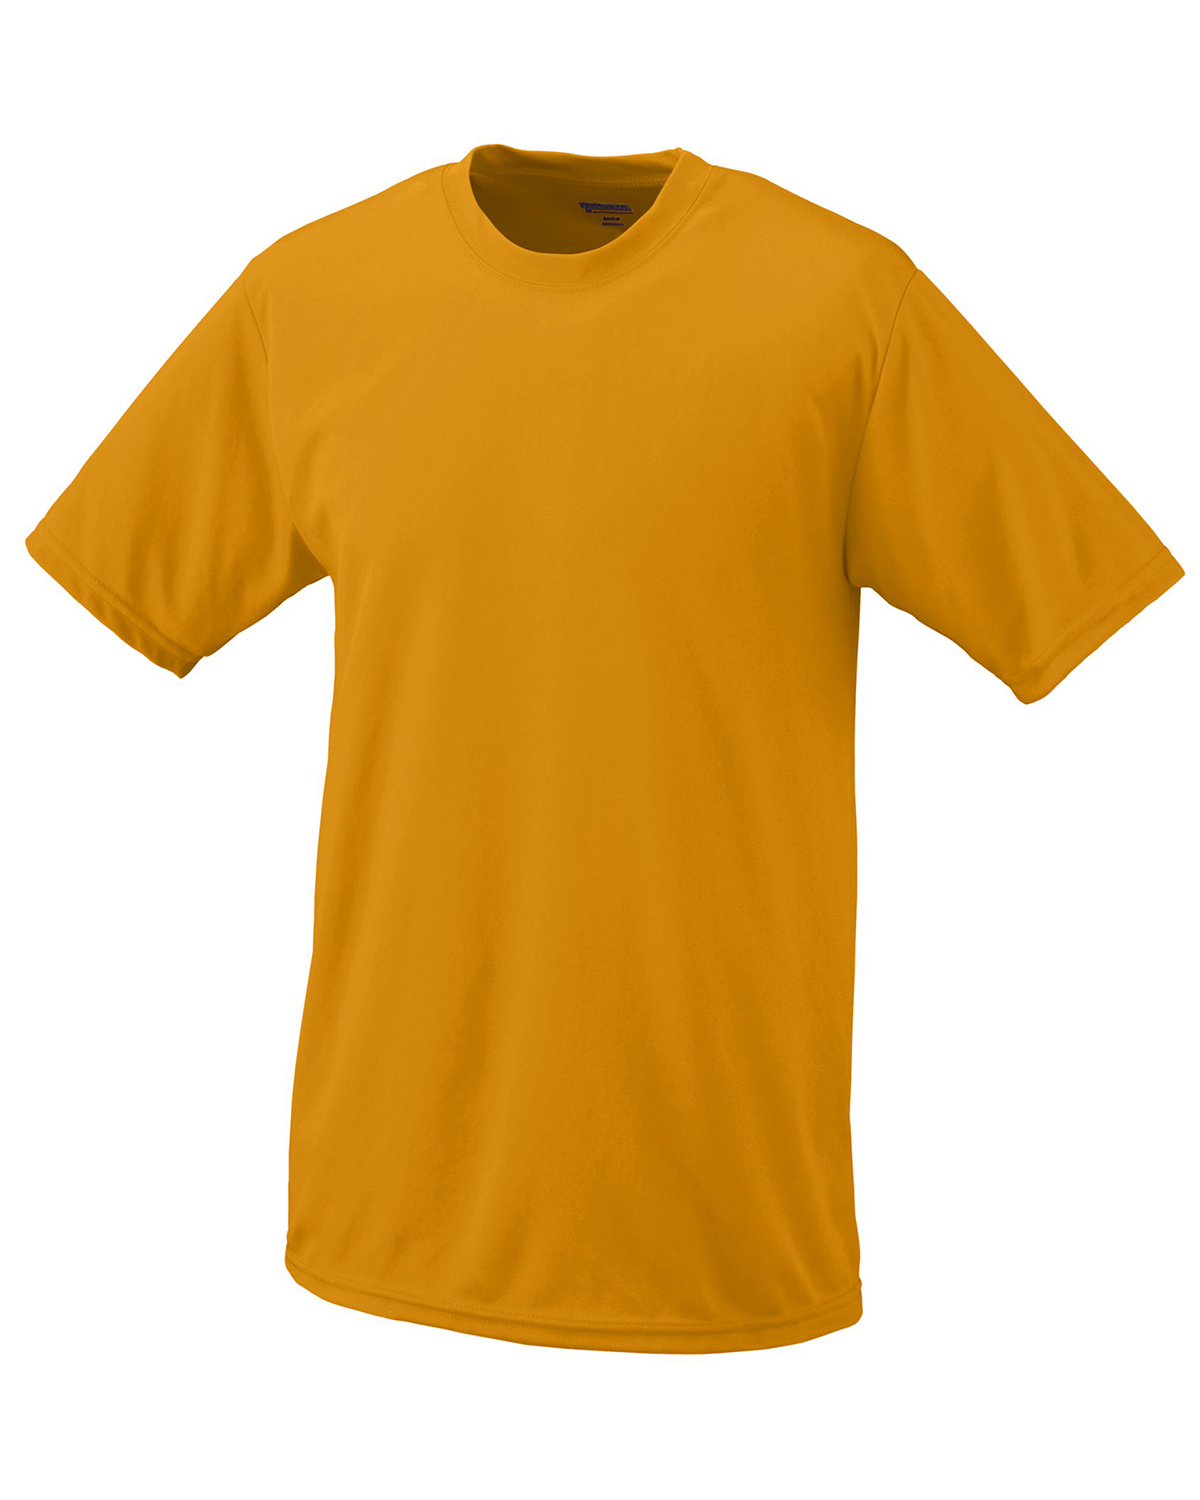 Buy 56% Savings Augusta Sportswear 790 Adult T-Shirt